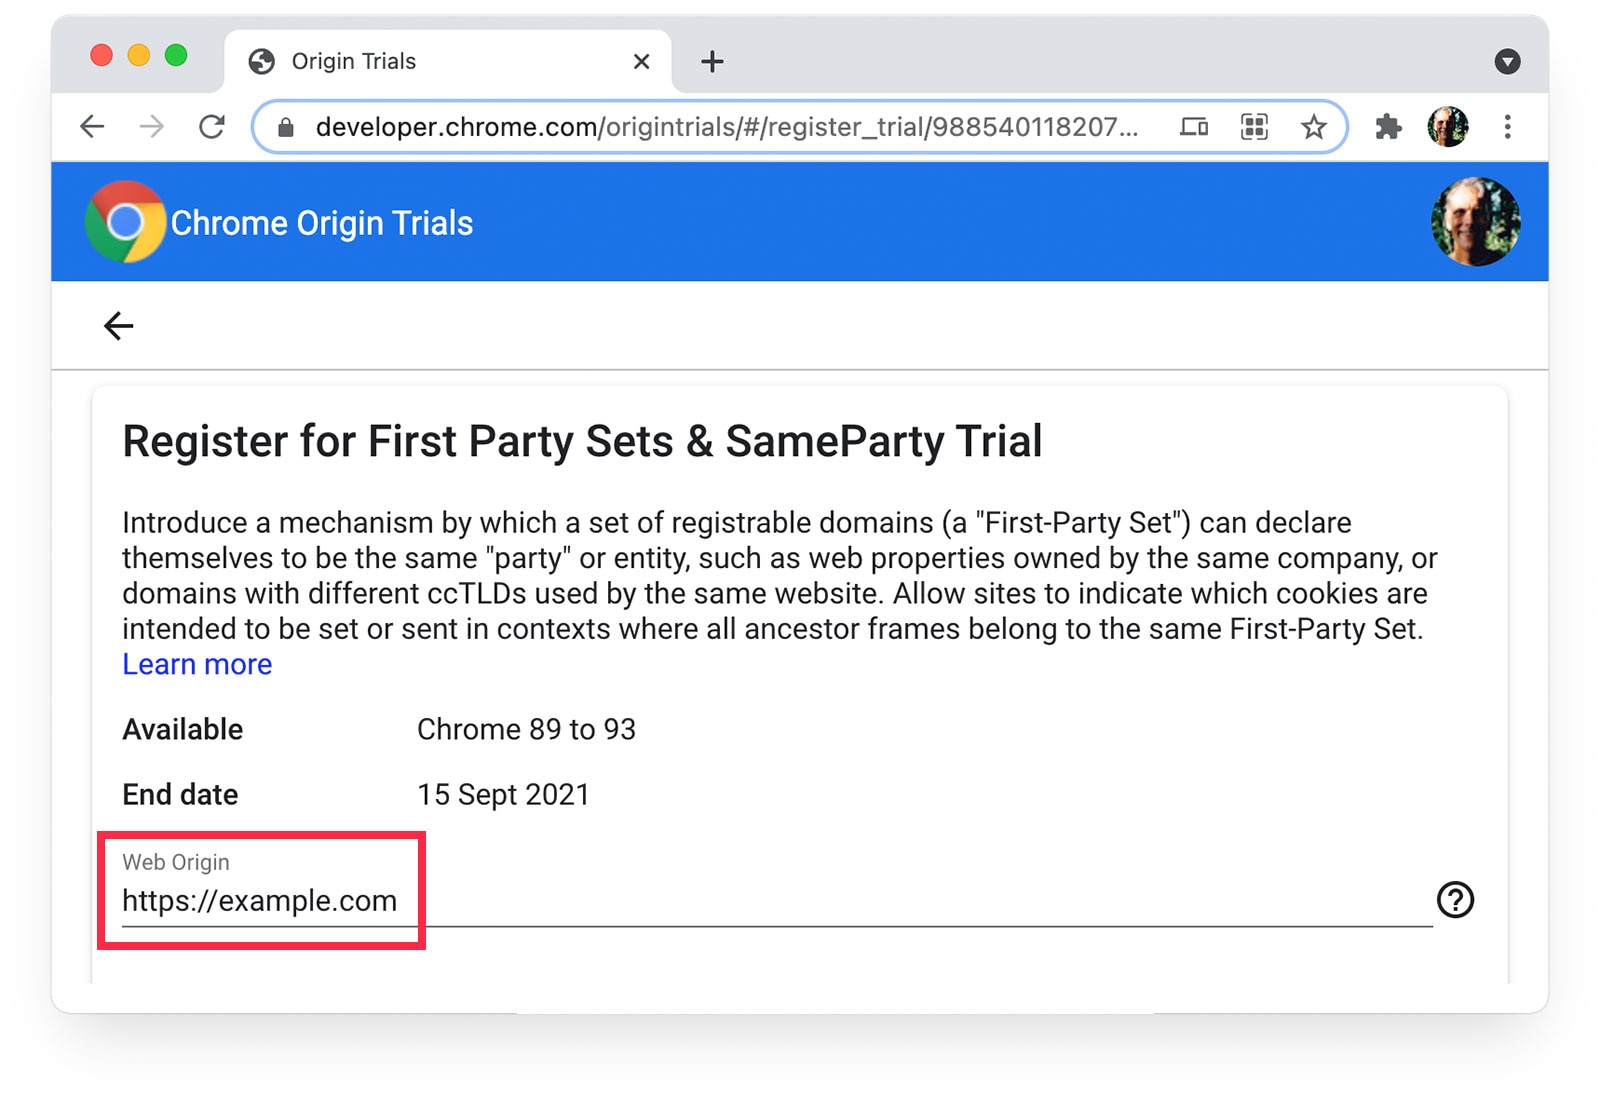 Chrome Origin Trials 
page showing https://example.com selected as Web Origin.